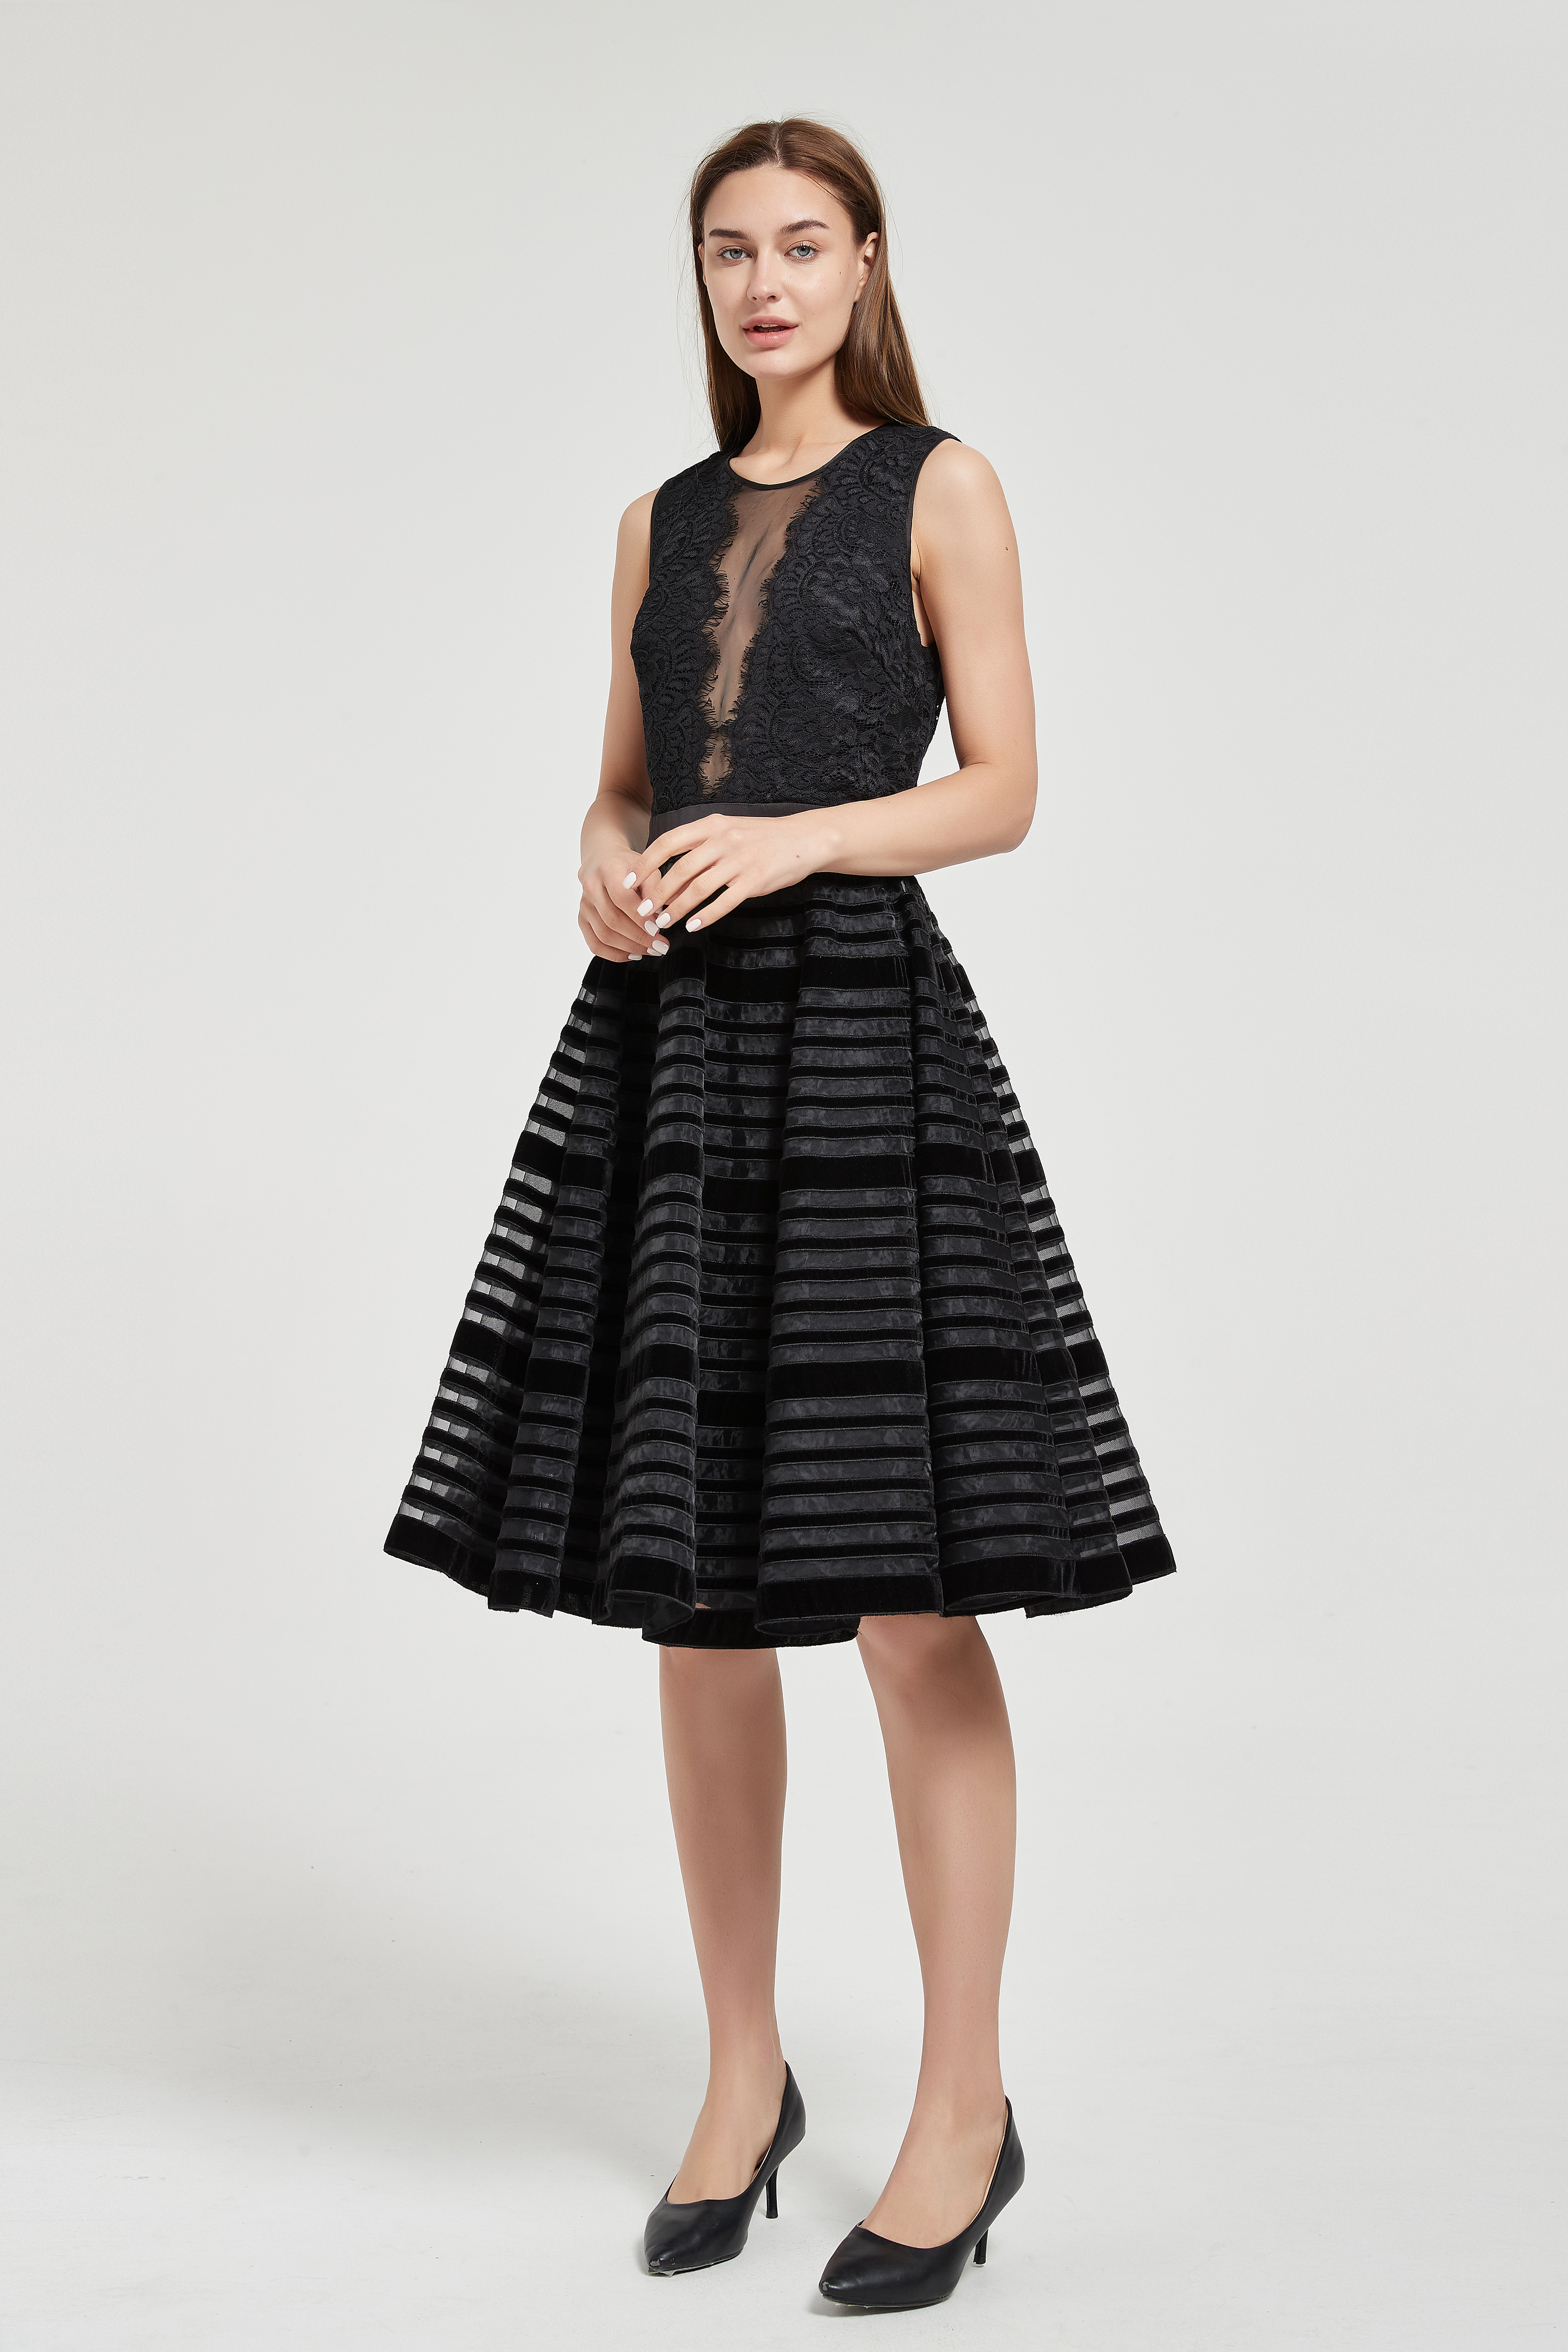 Women's Black Lace Sleeveless Dress